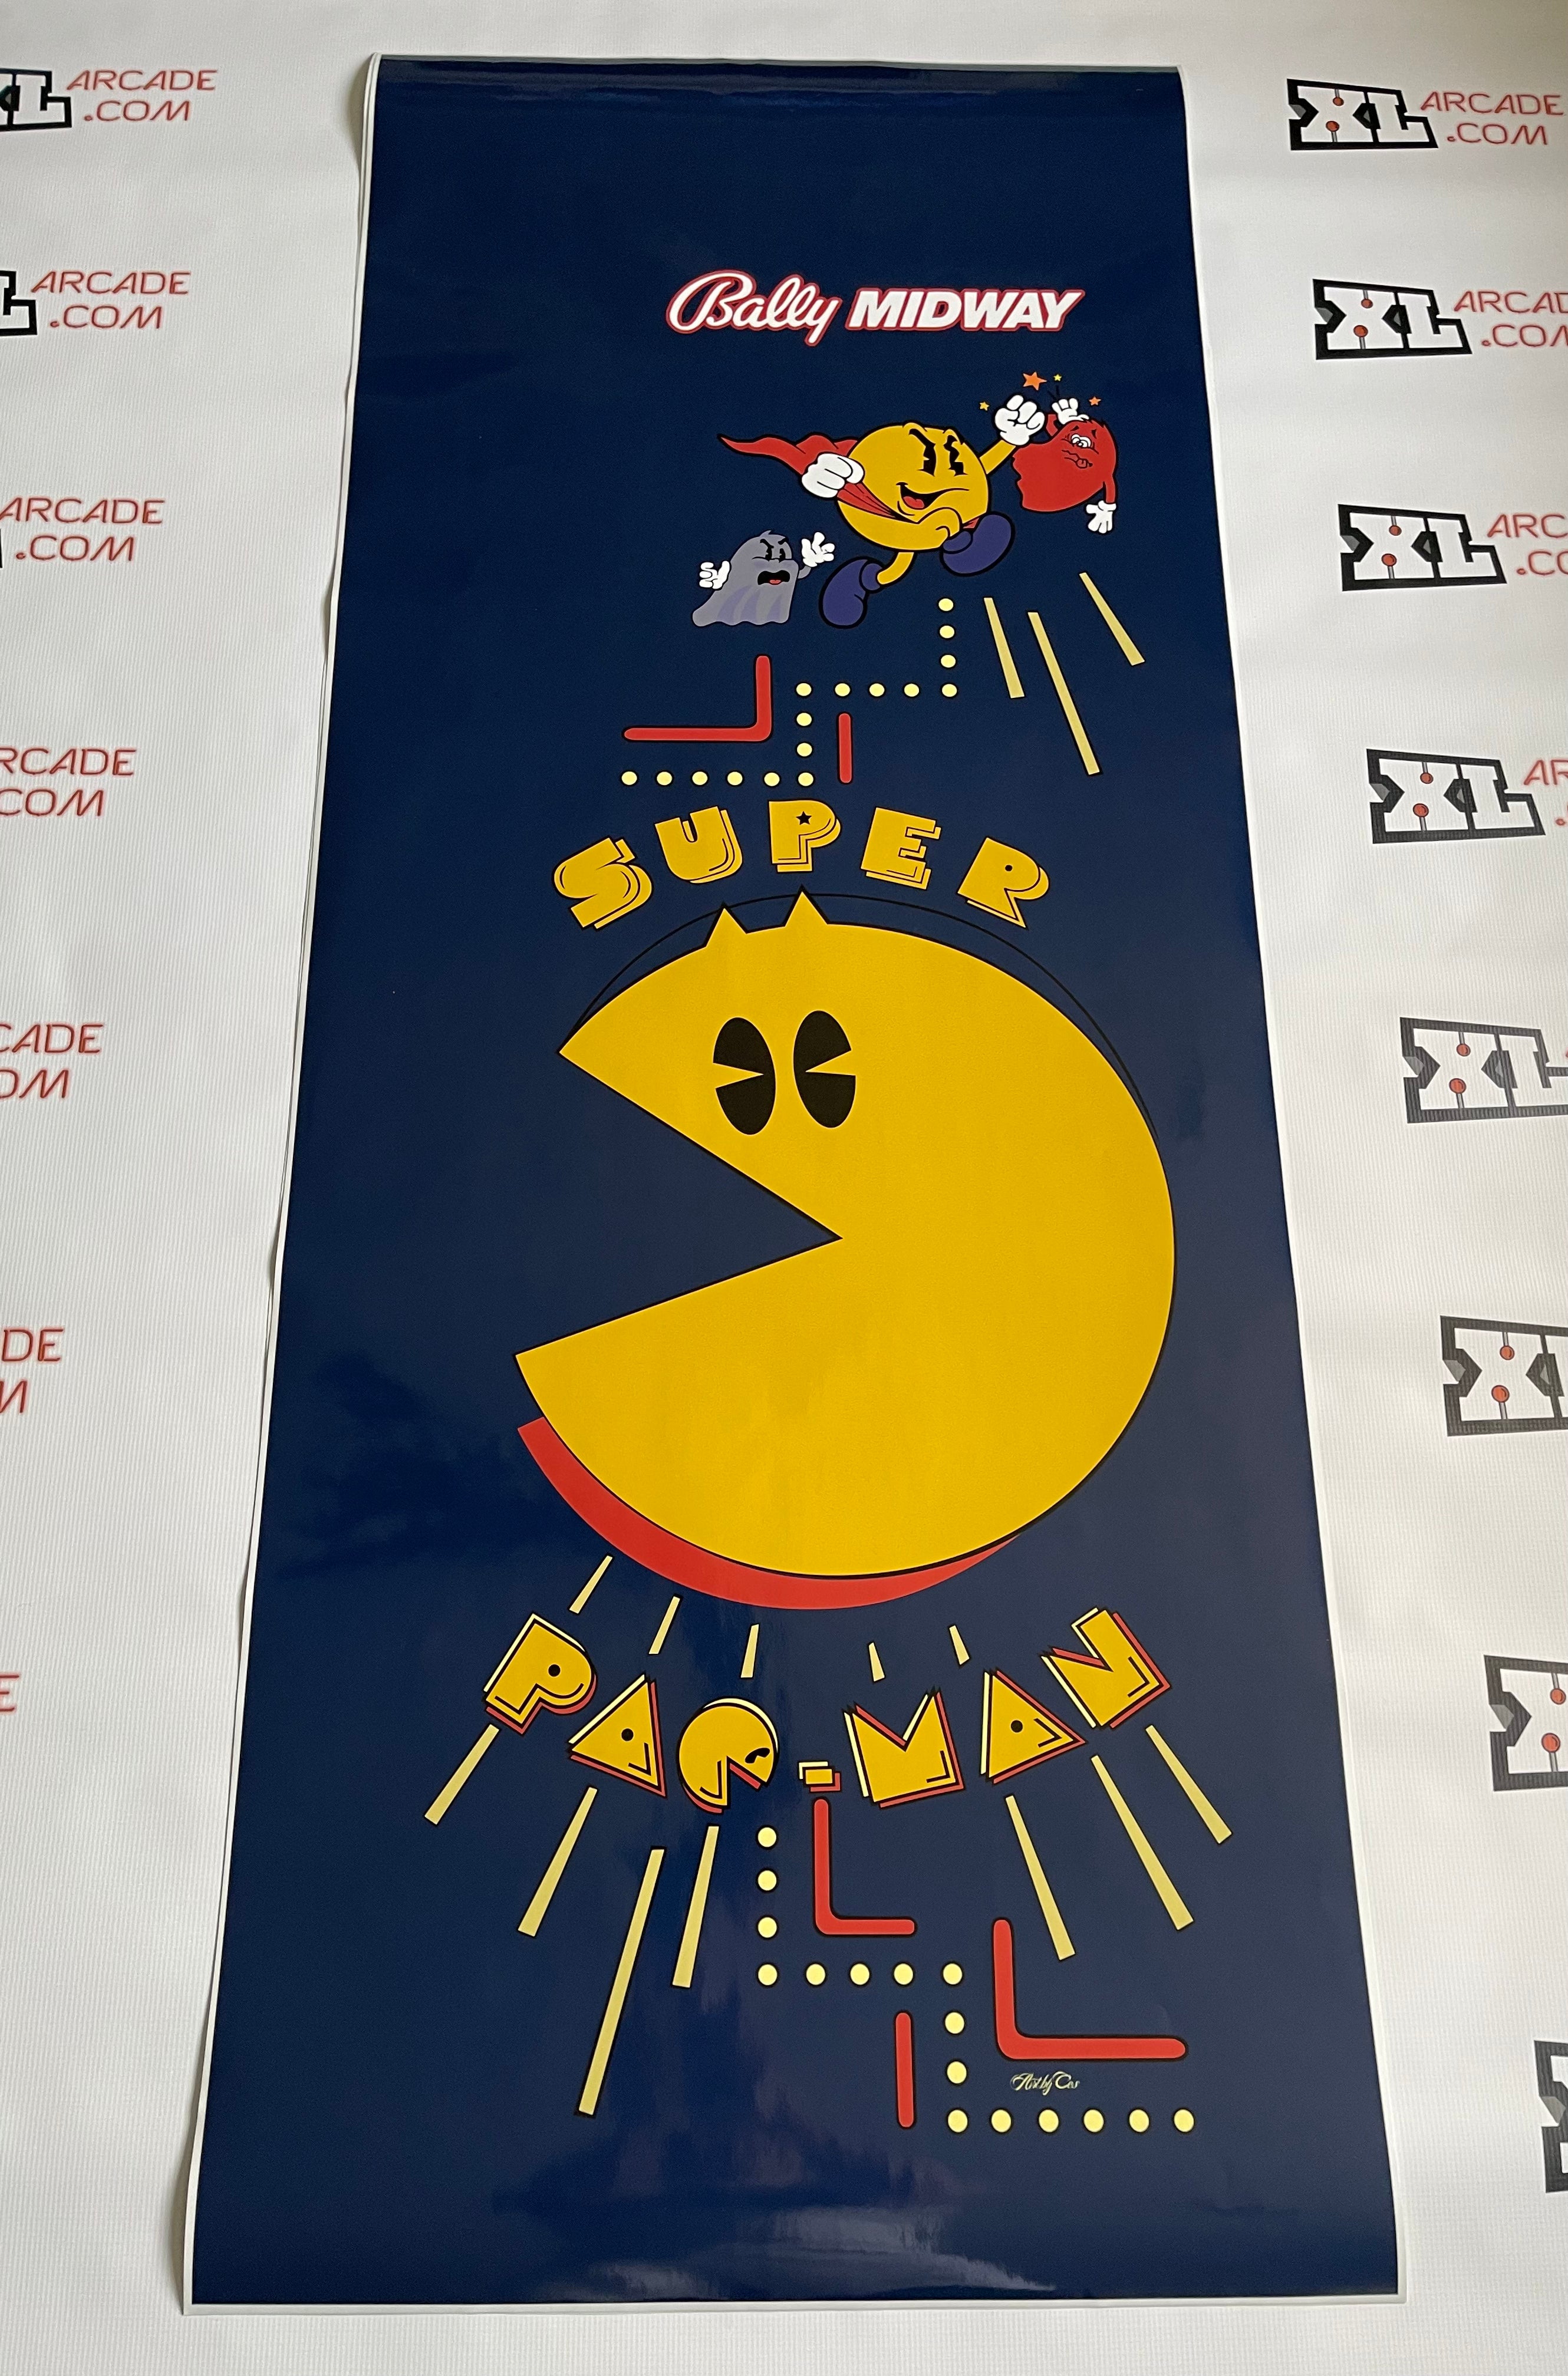 Super Pac-Man Cabaret Complete Art Kit